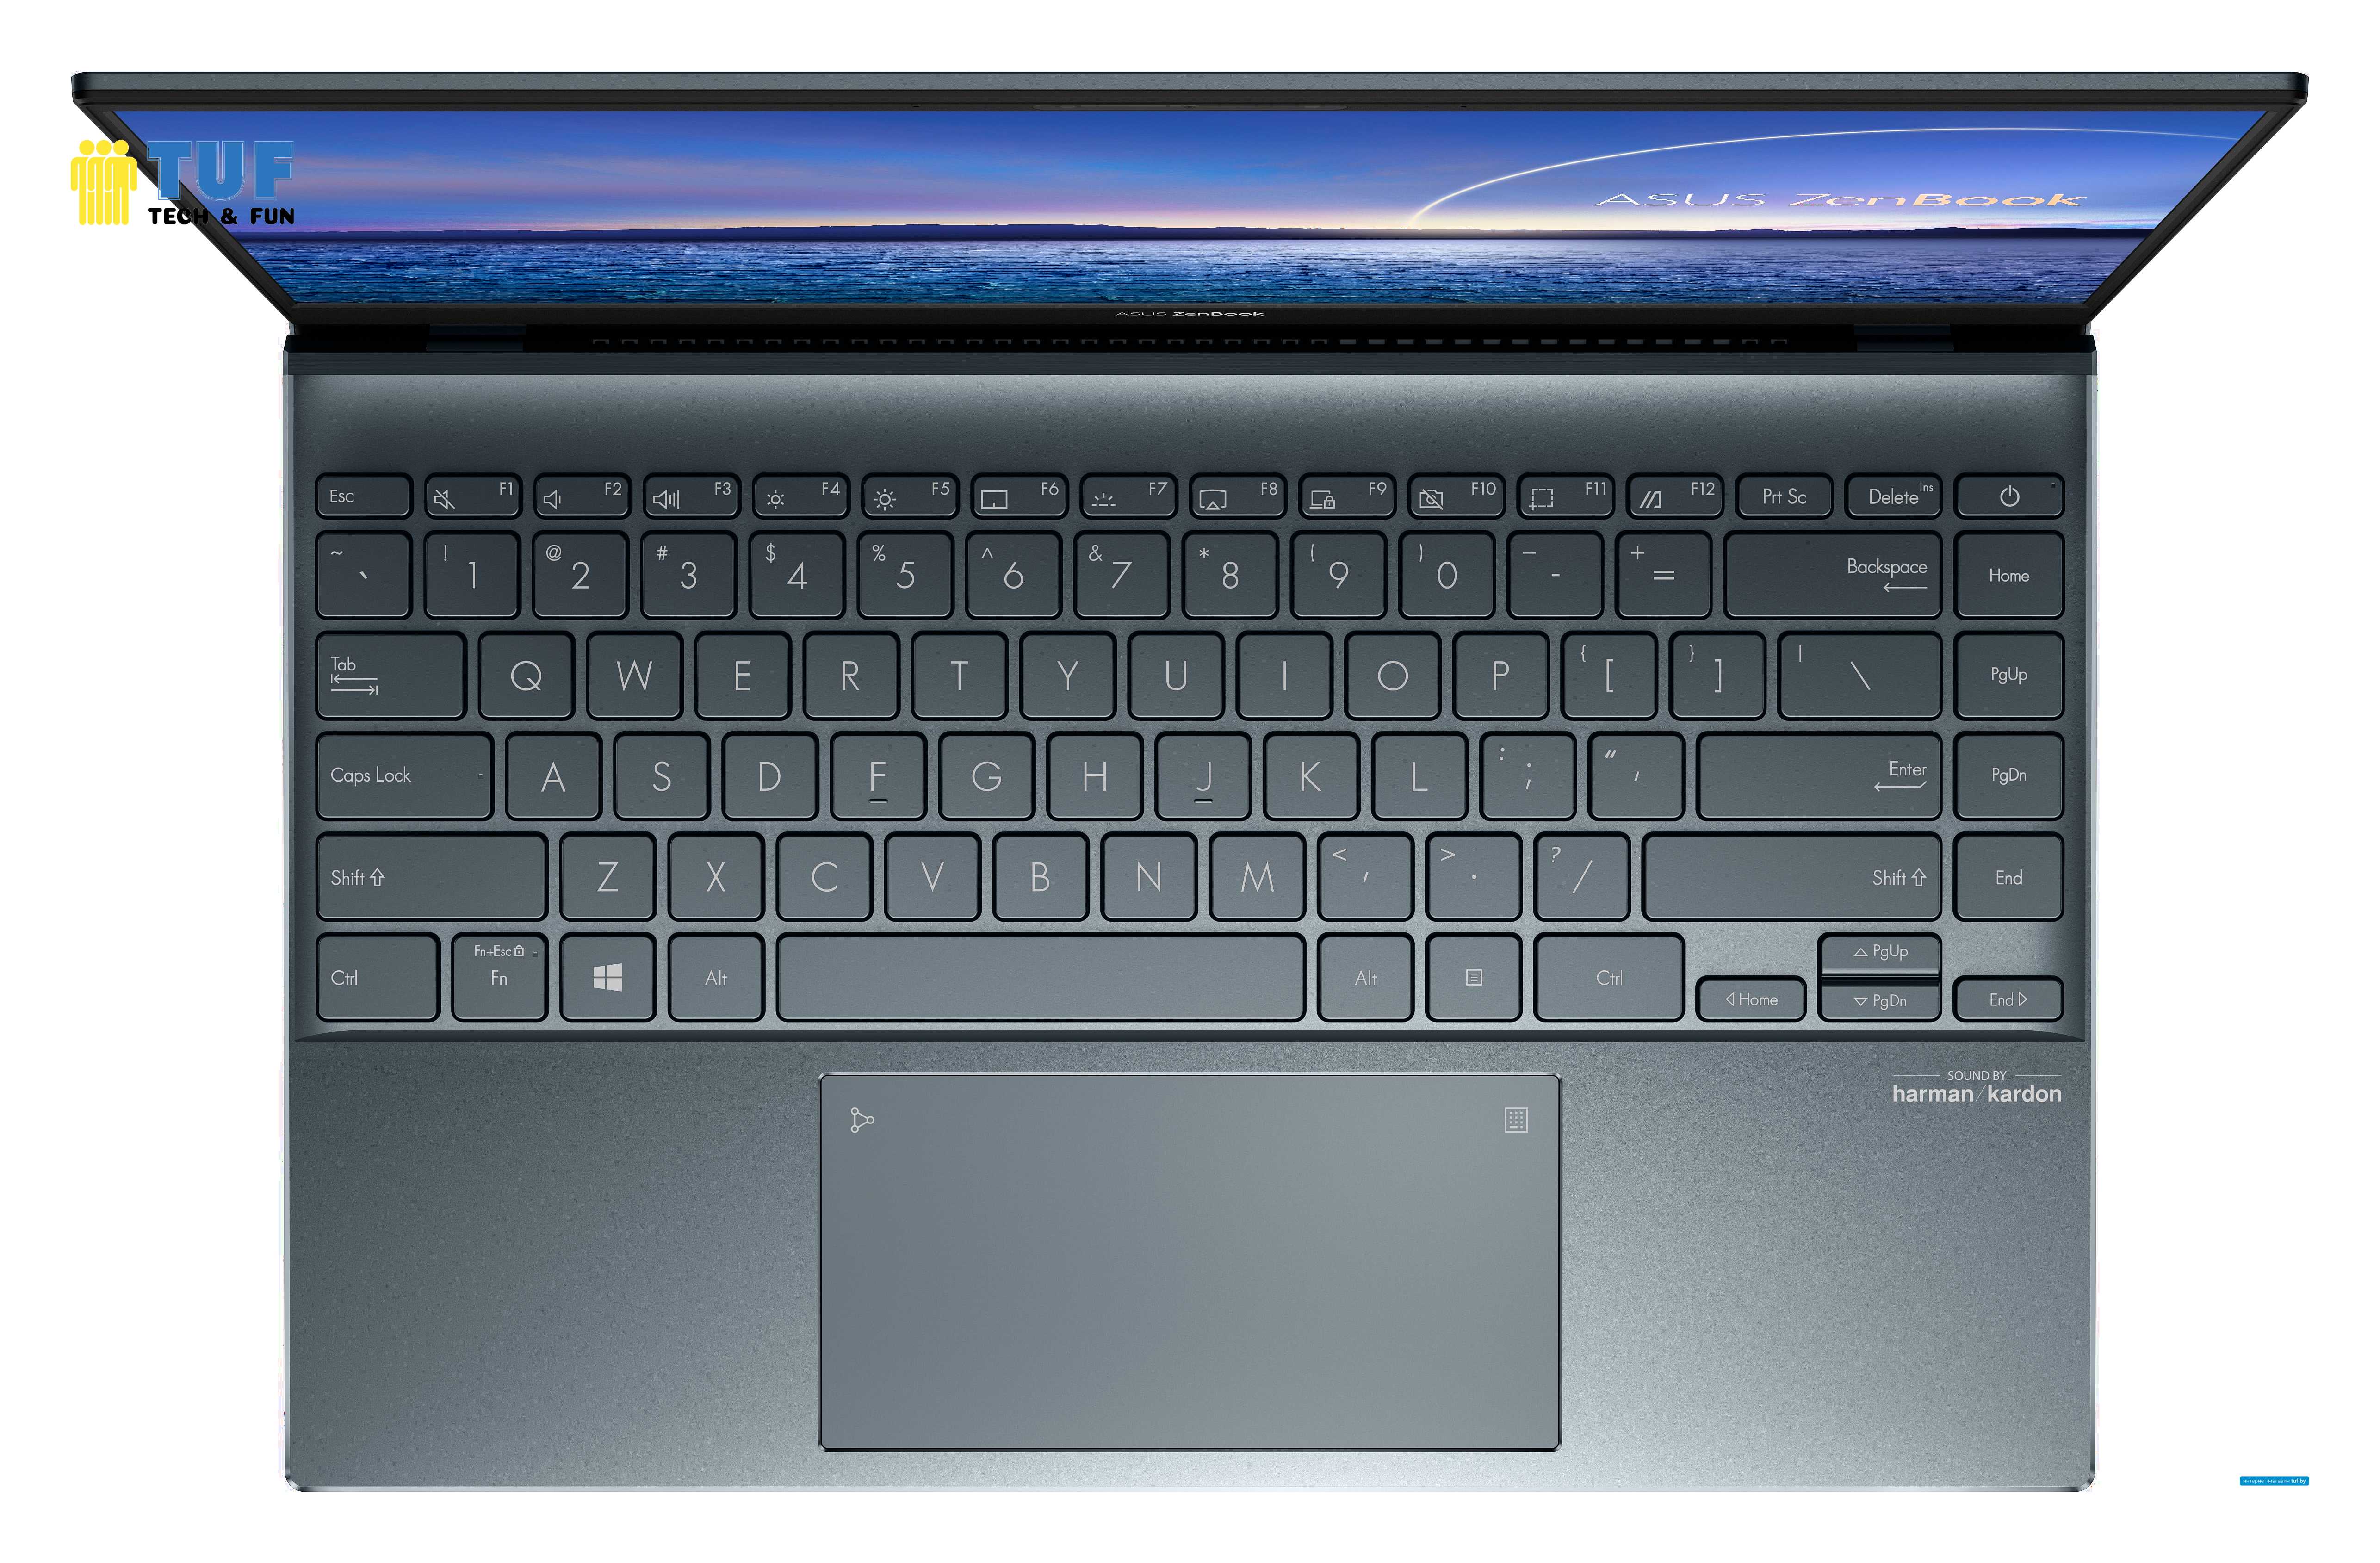 Ноутбук ASUS ZenBook 14 UX425EA-KC236R